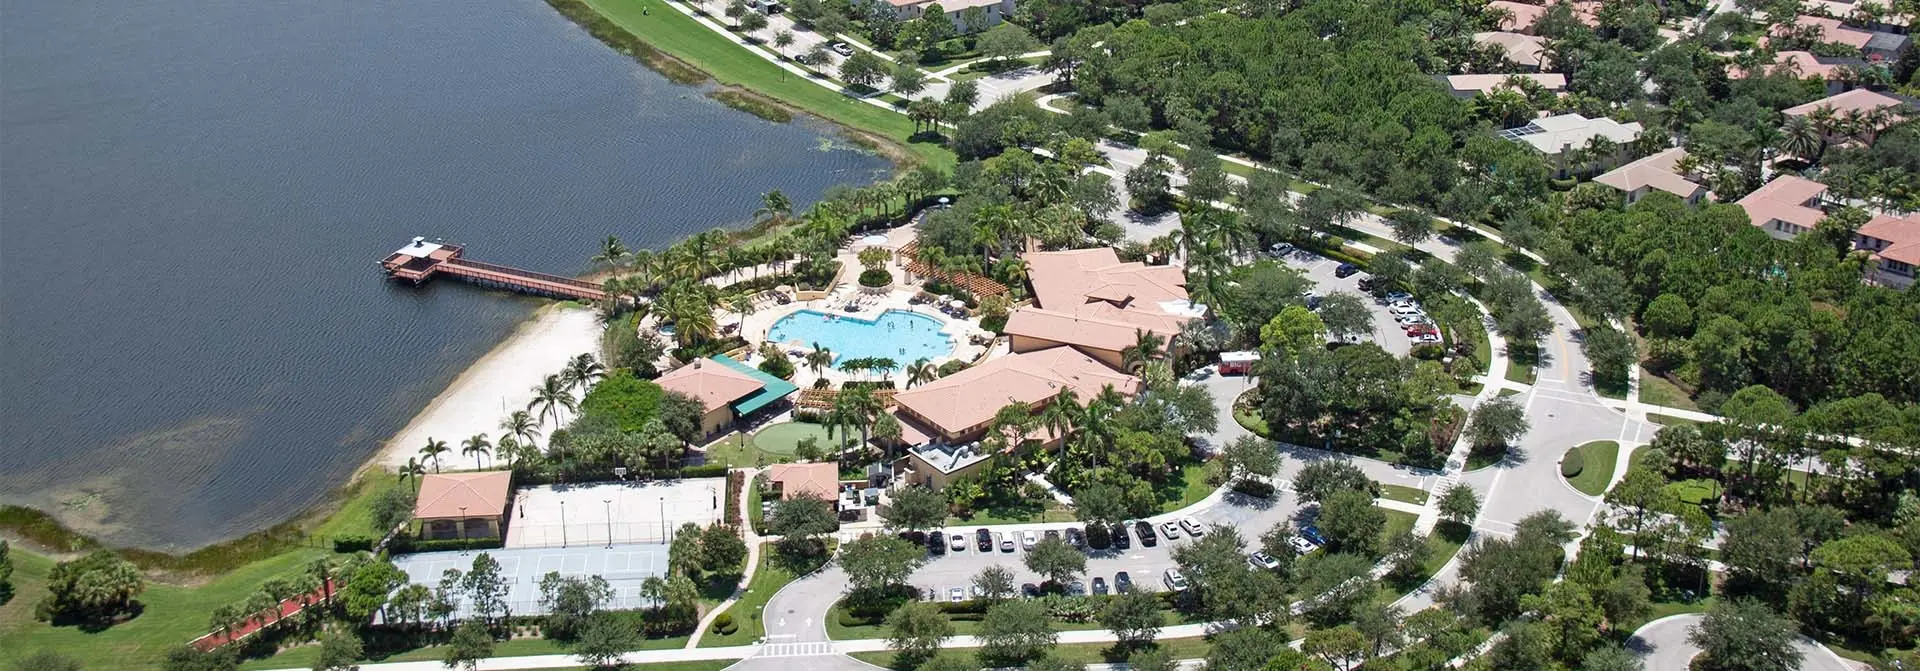 Evergrene Palm Beach Gardens for Sale | Evergrene Homes For Sale